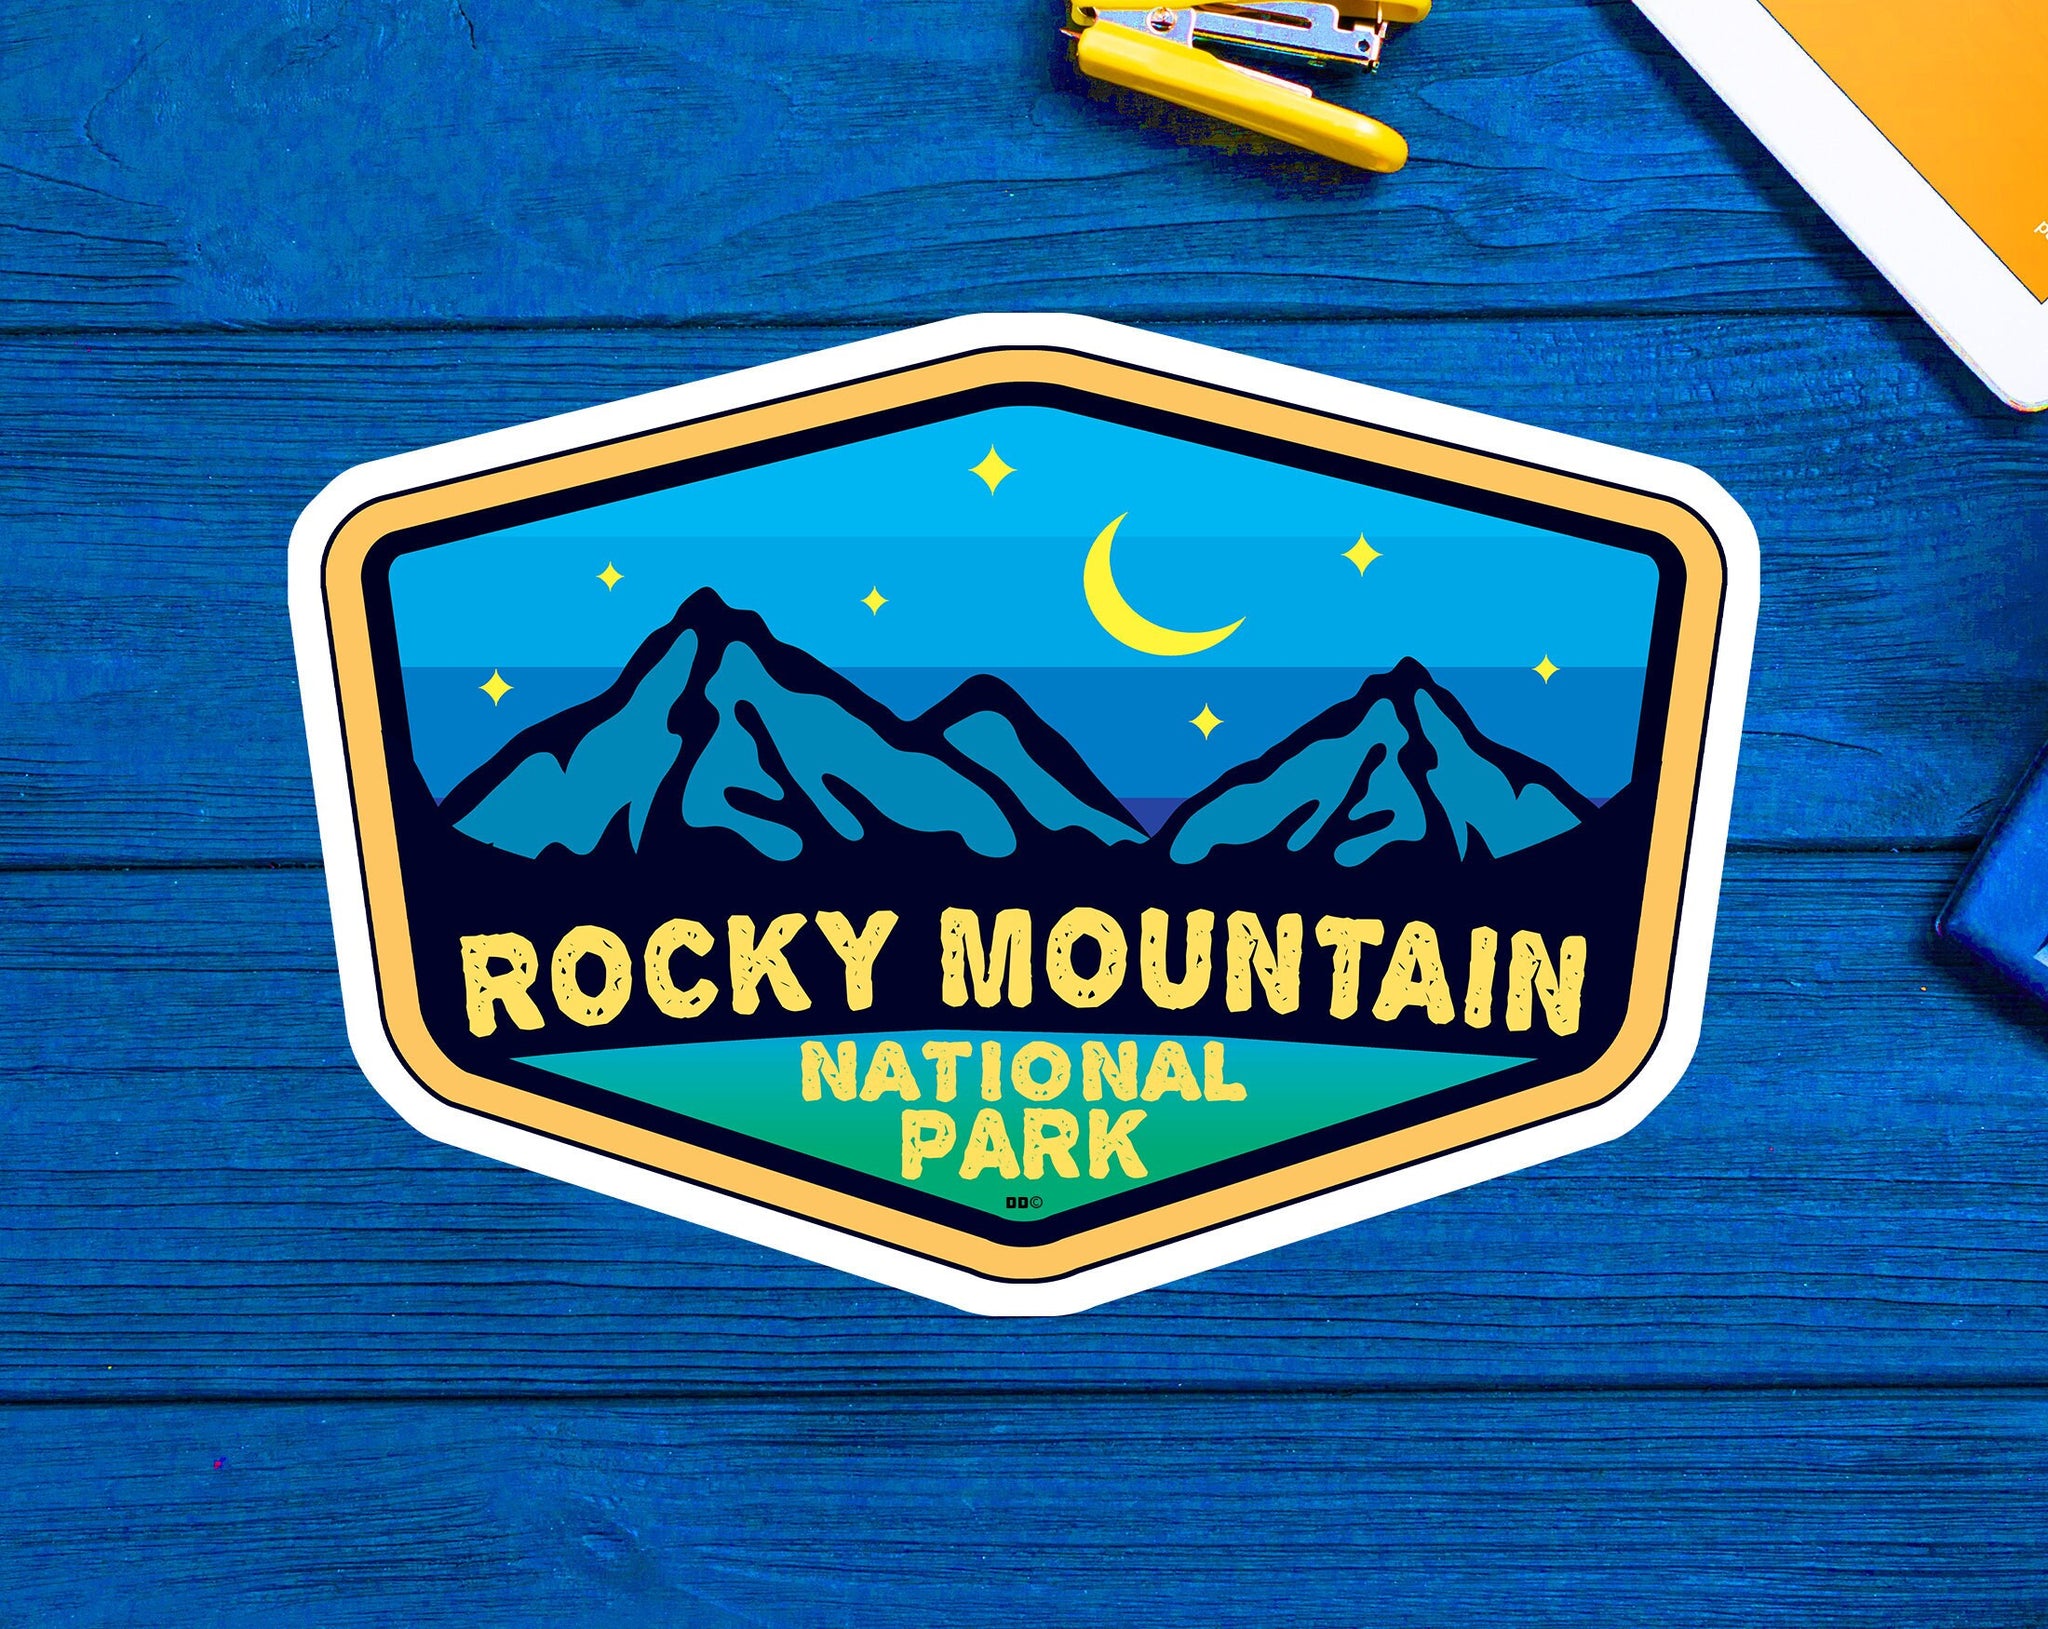 Rocky Mountain National Park Colorado Sticker 3.75" x 2.5" Vinyl Decal